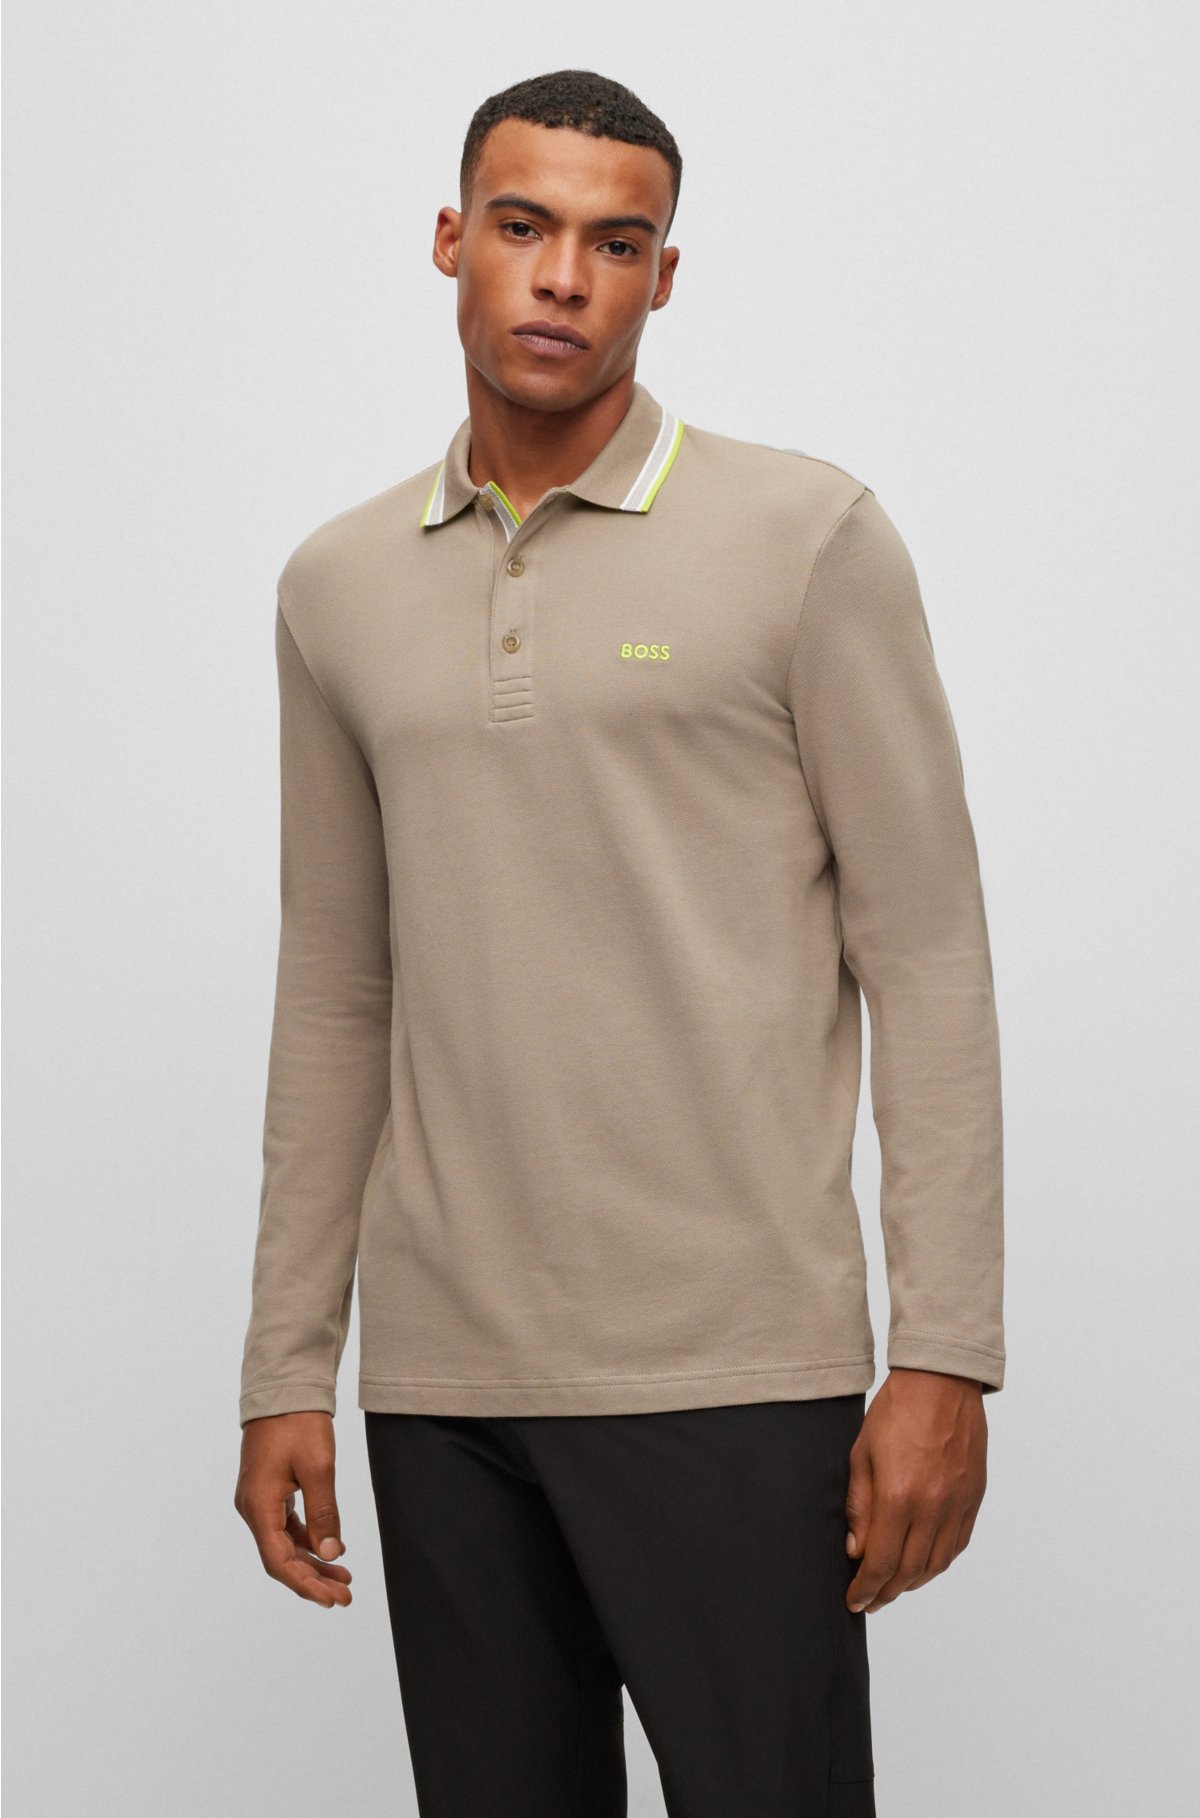 Formålet Leopard affældige BOSS - Long-sleeved cotton-piqué polo shirt with contrast logo